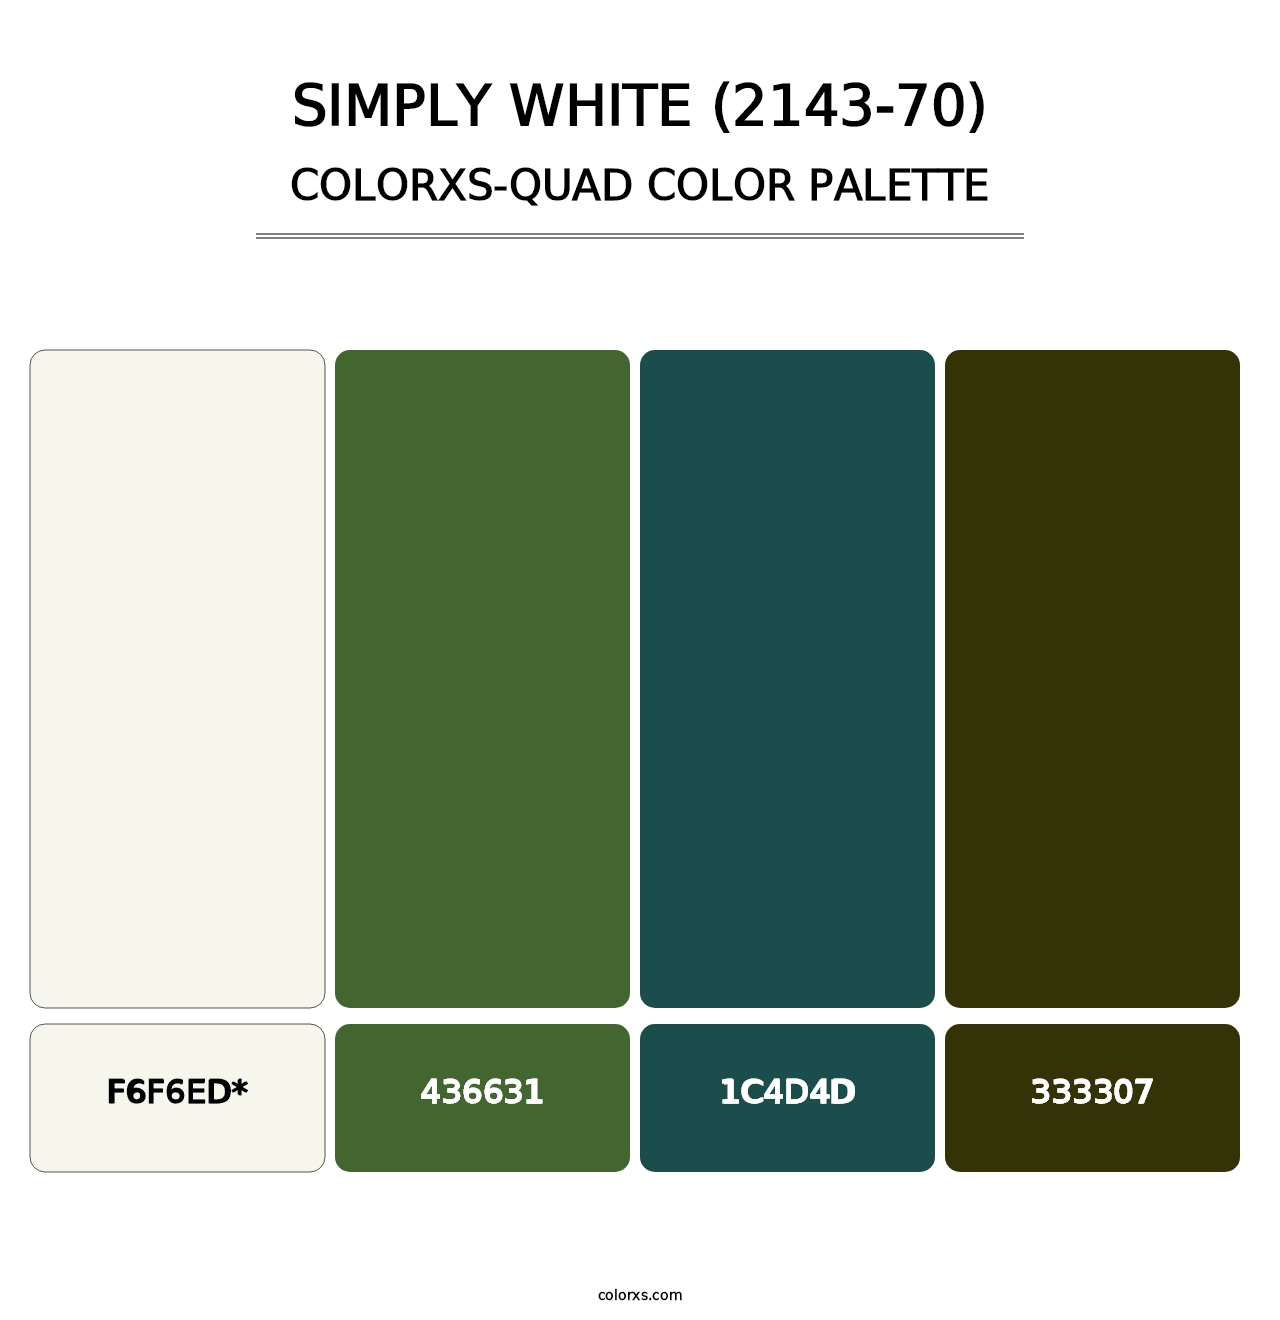 Simply White (2143-70) - Colorxs Quad Palette